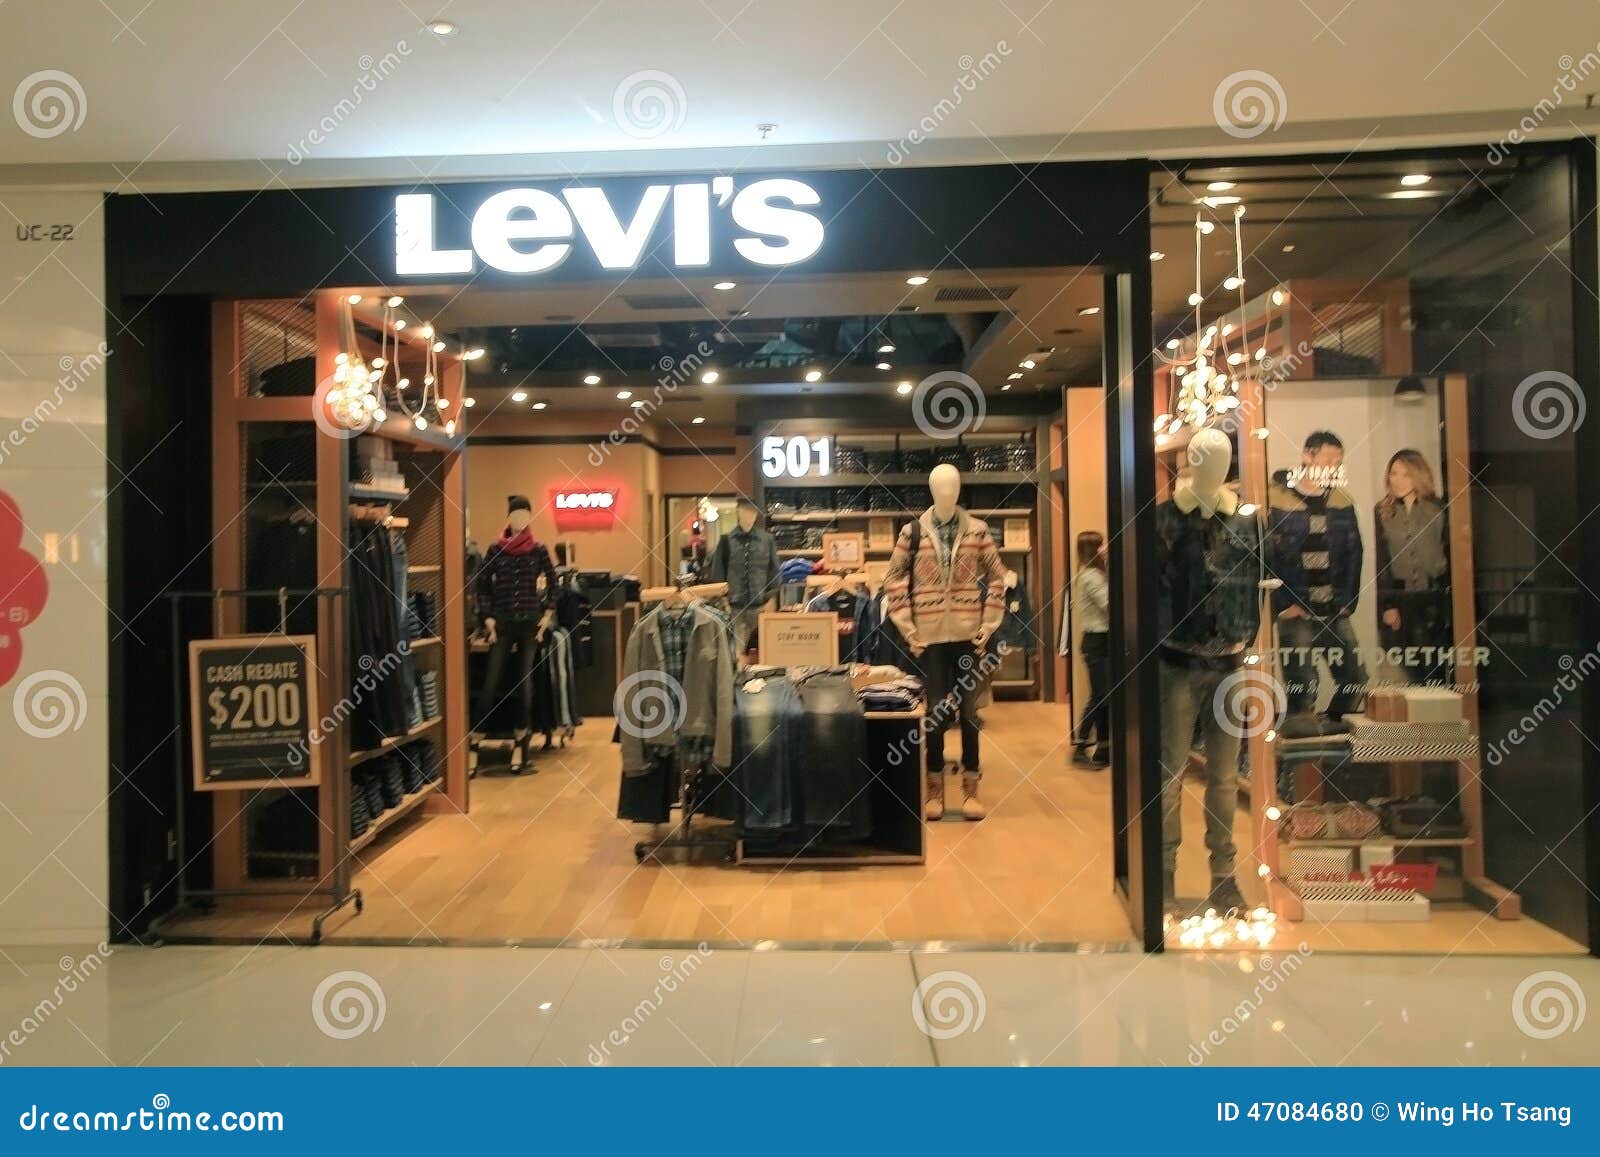 levi's retail store near me